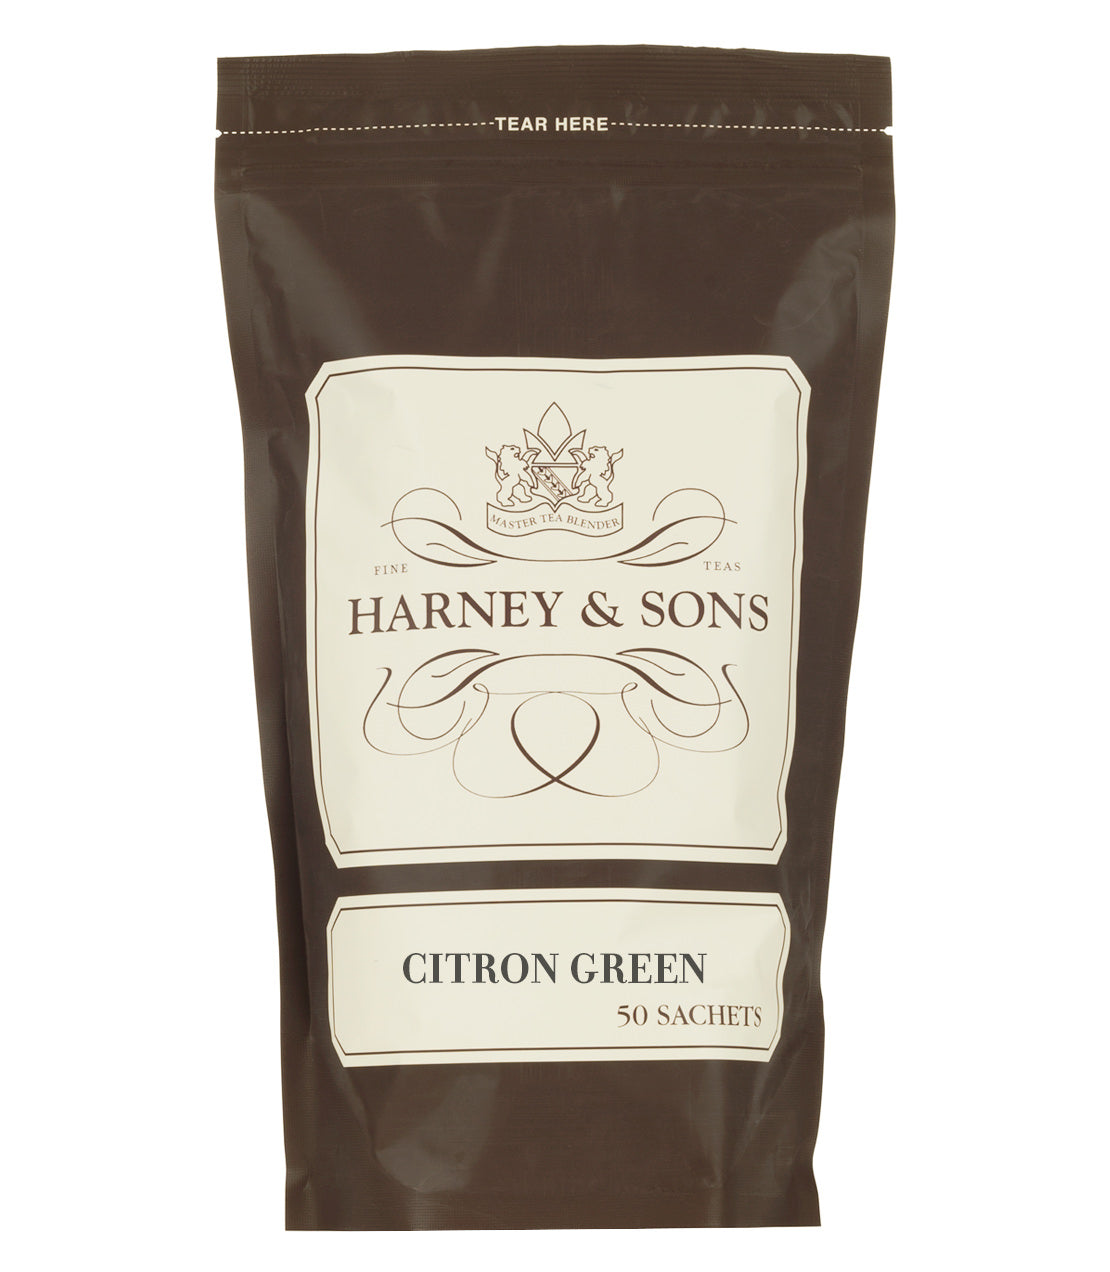 Citron Green - Sachets Bag of 50 Sachets - Harney & Sons Fine Teas